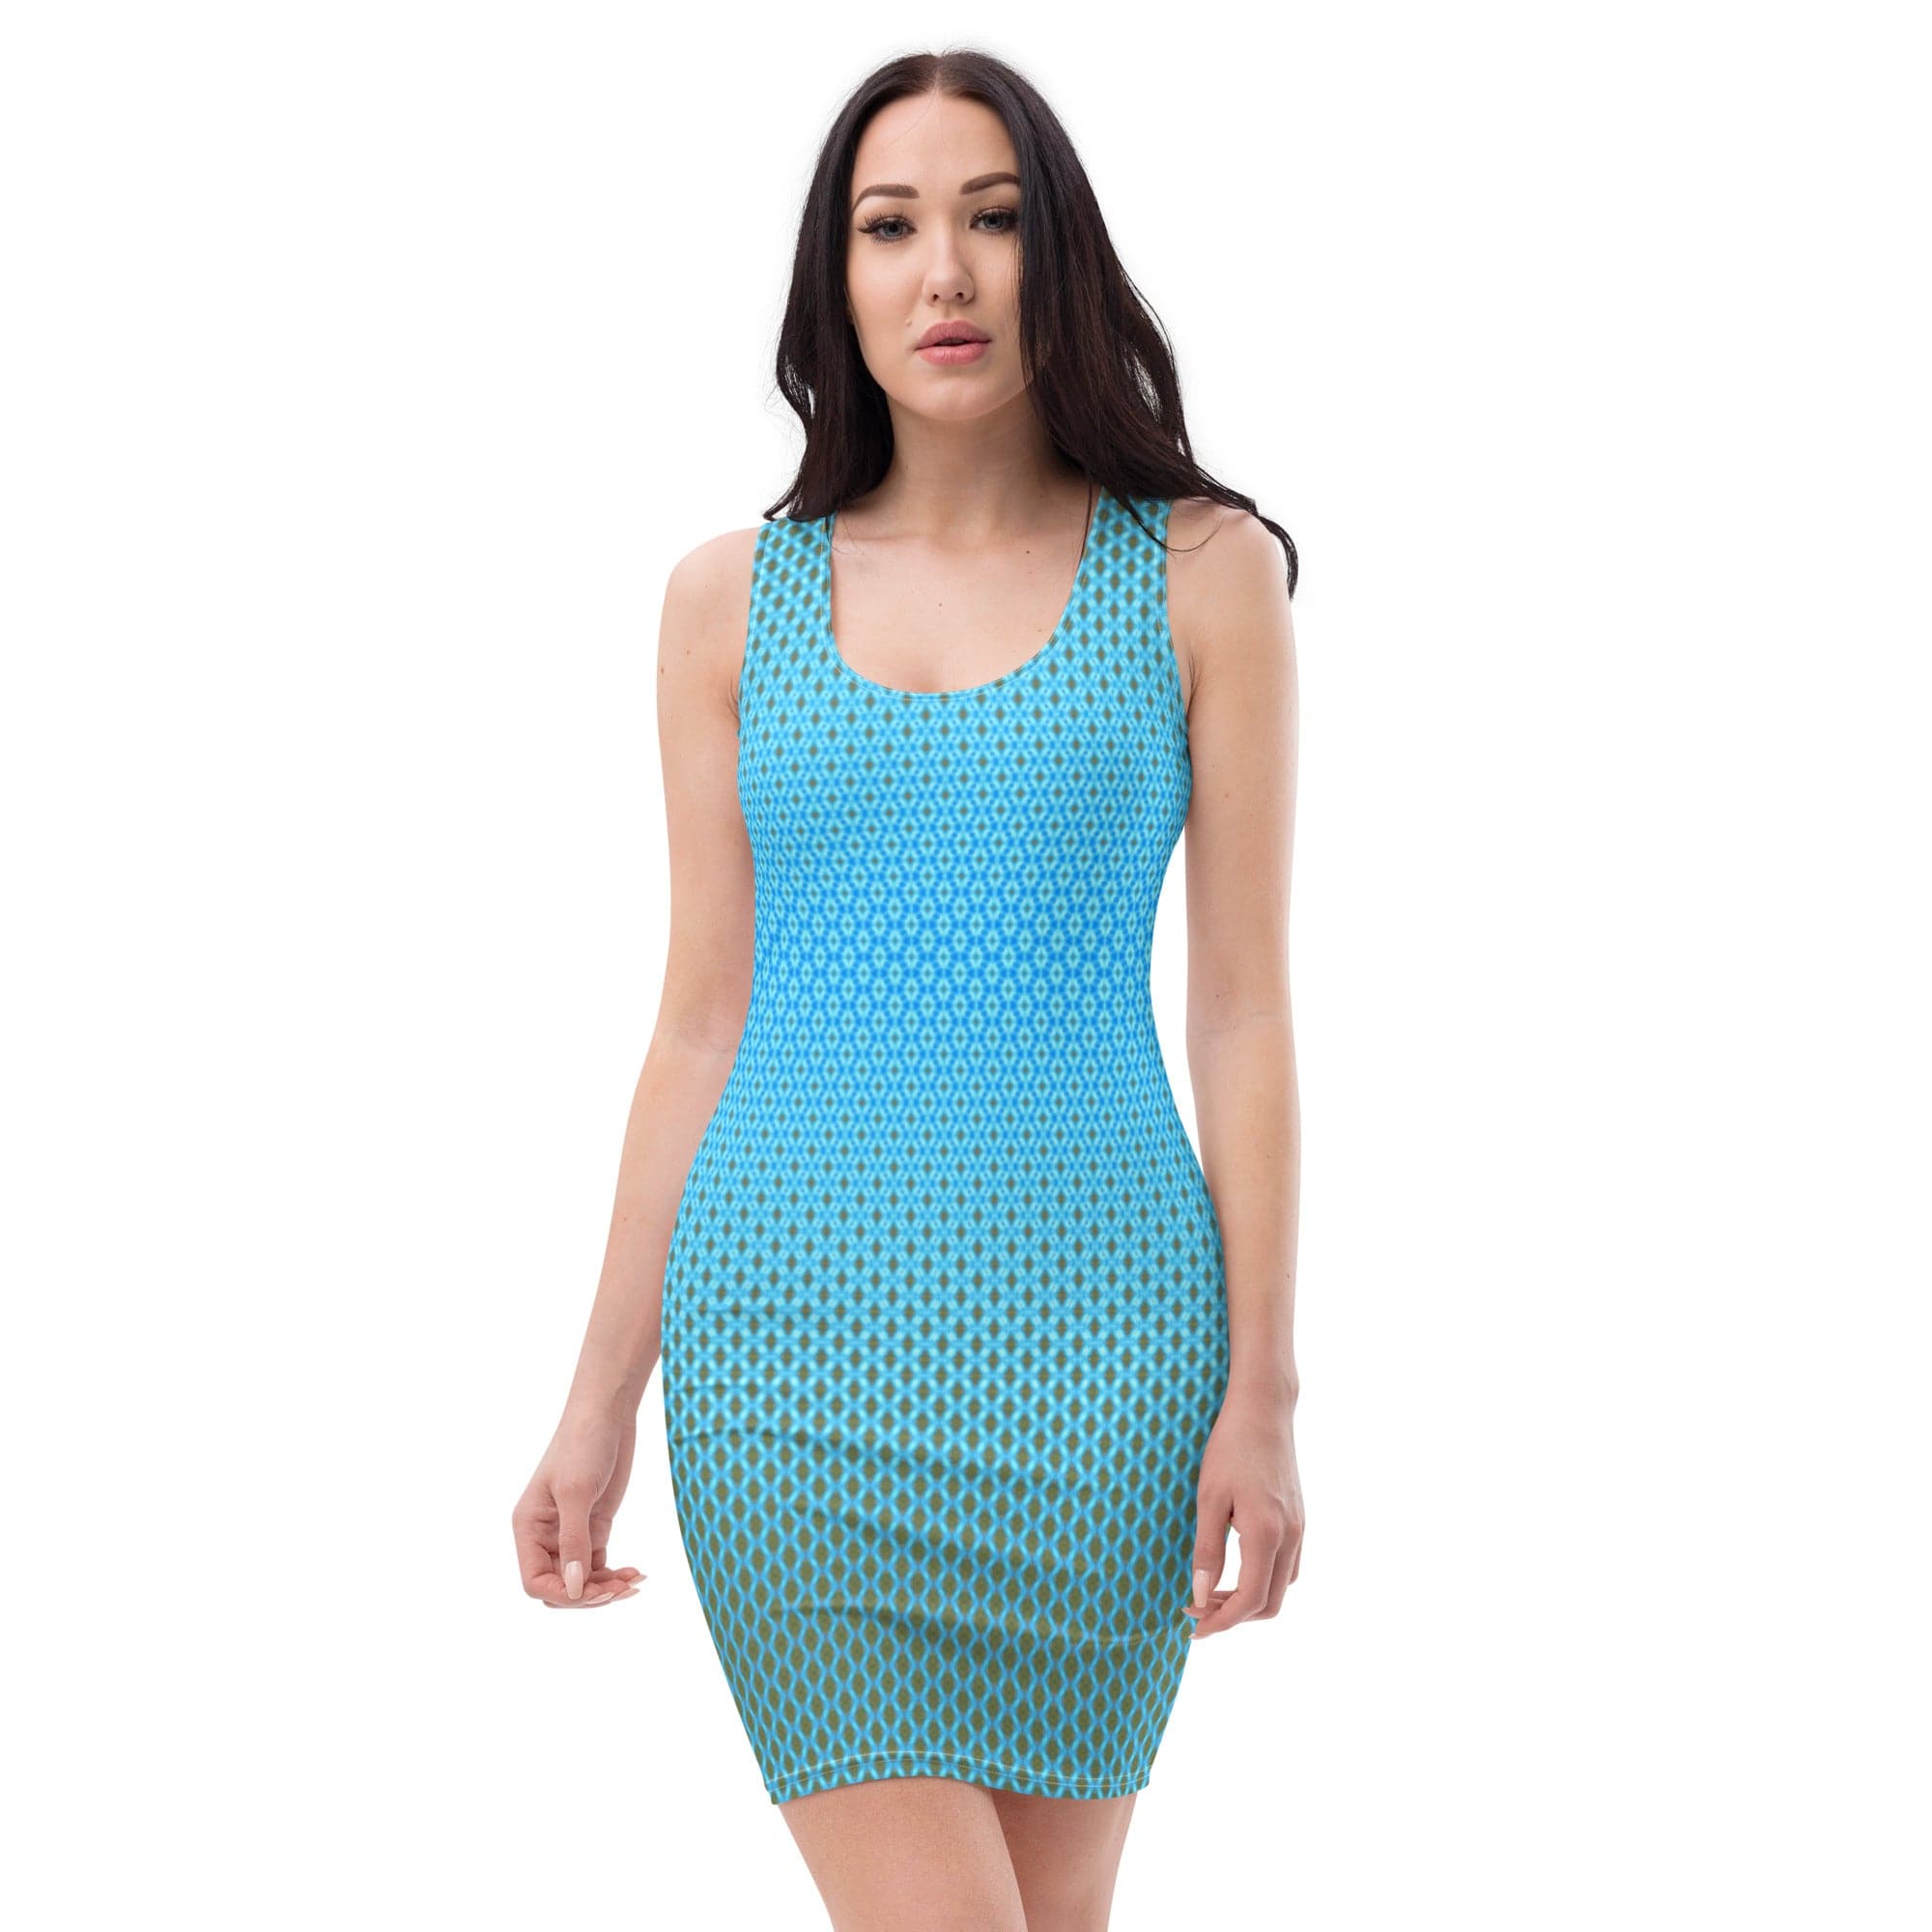 Atlantic Blue fine pattern designed Sublimation Cut & Sew Dress, by Sensus Studio Design